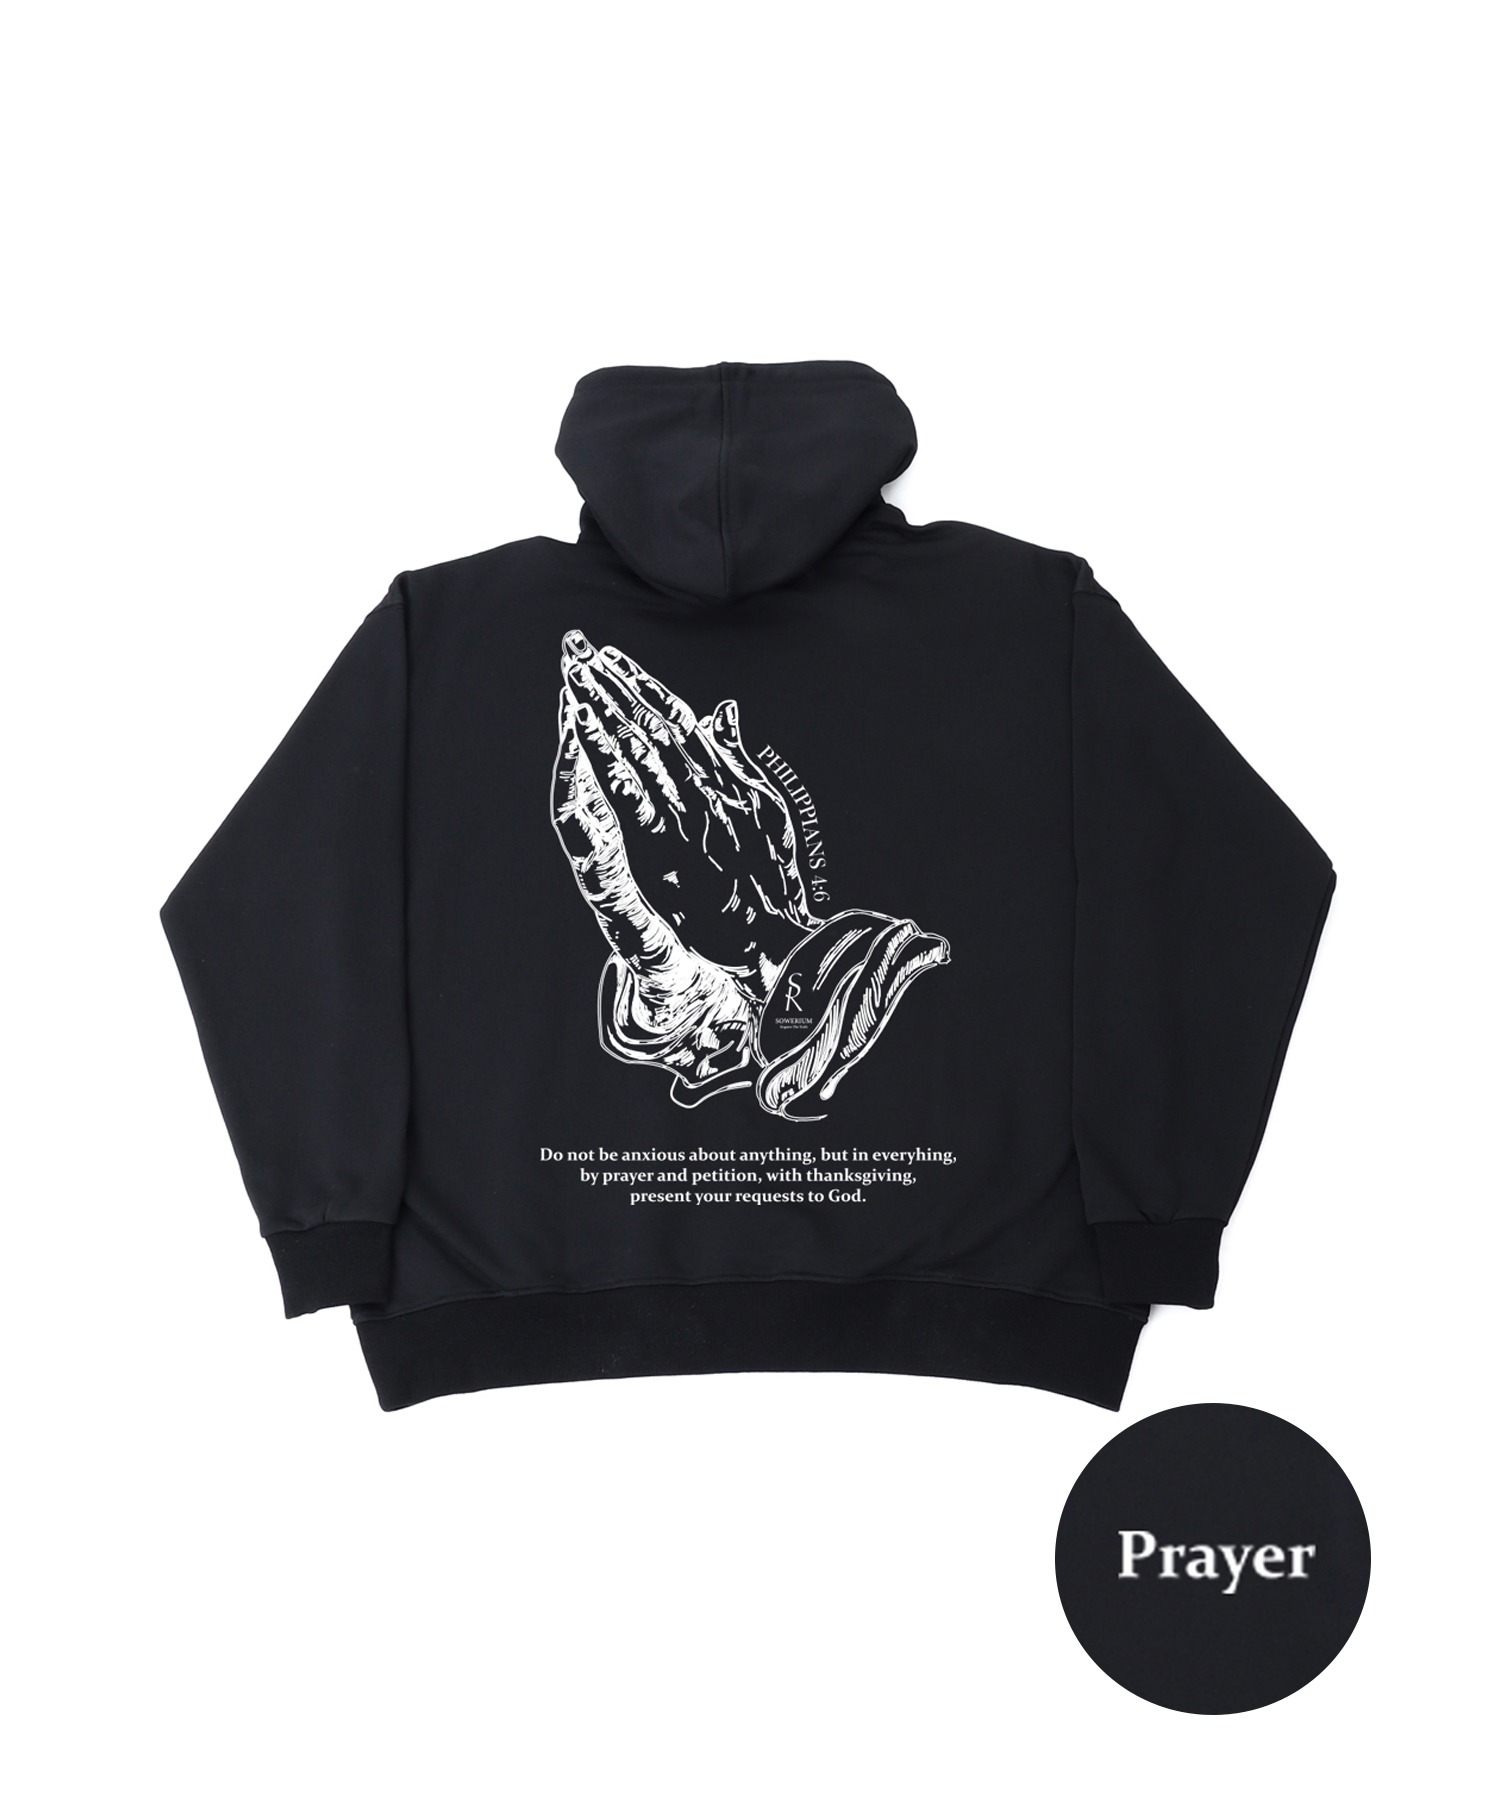 Prayer Hoody Black